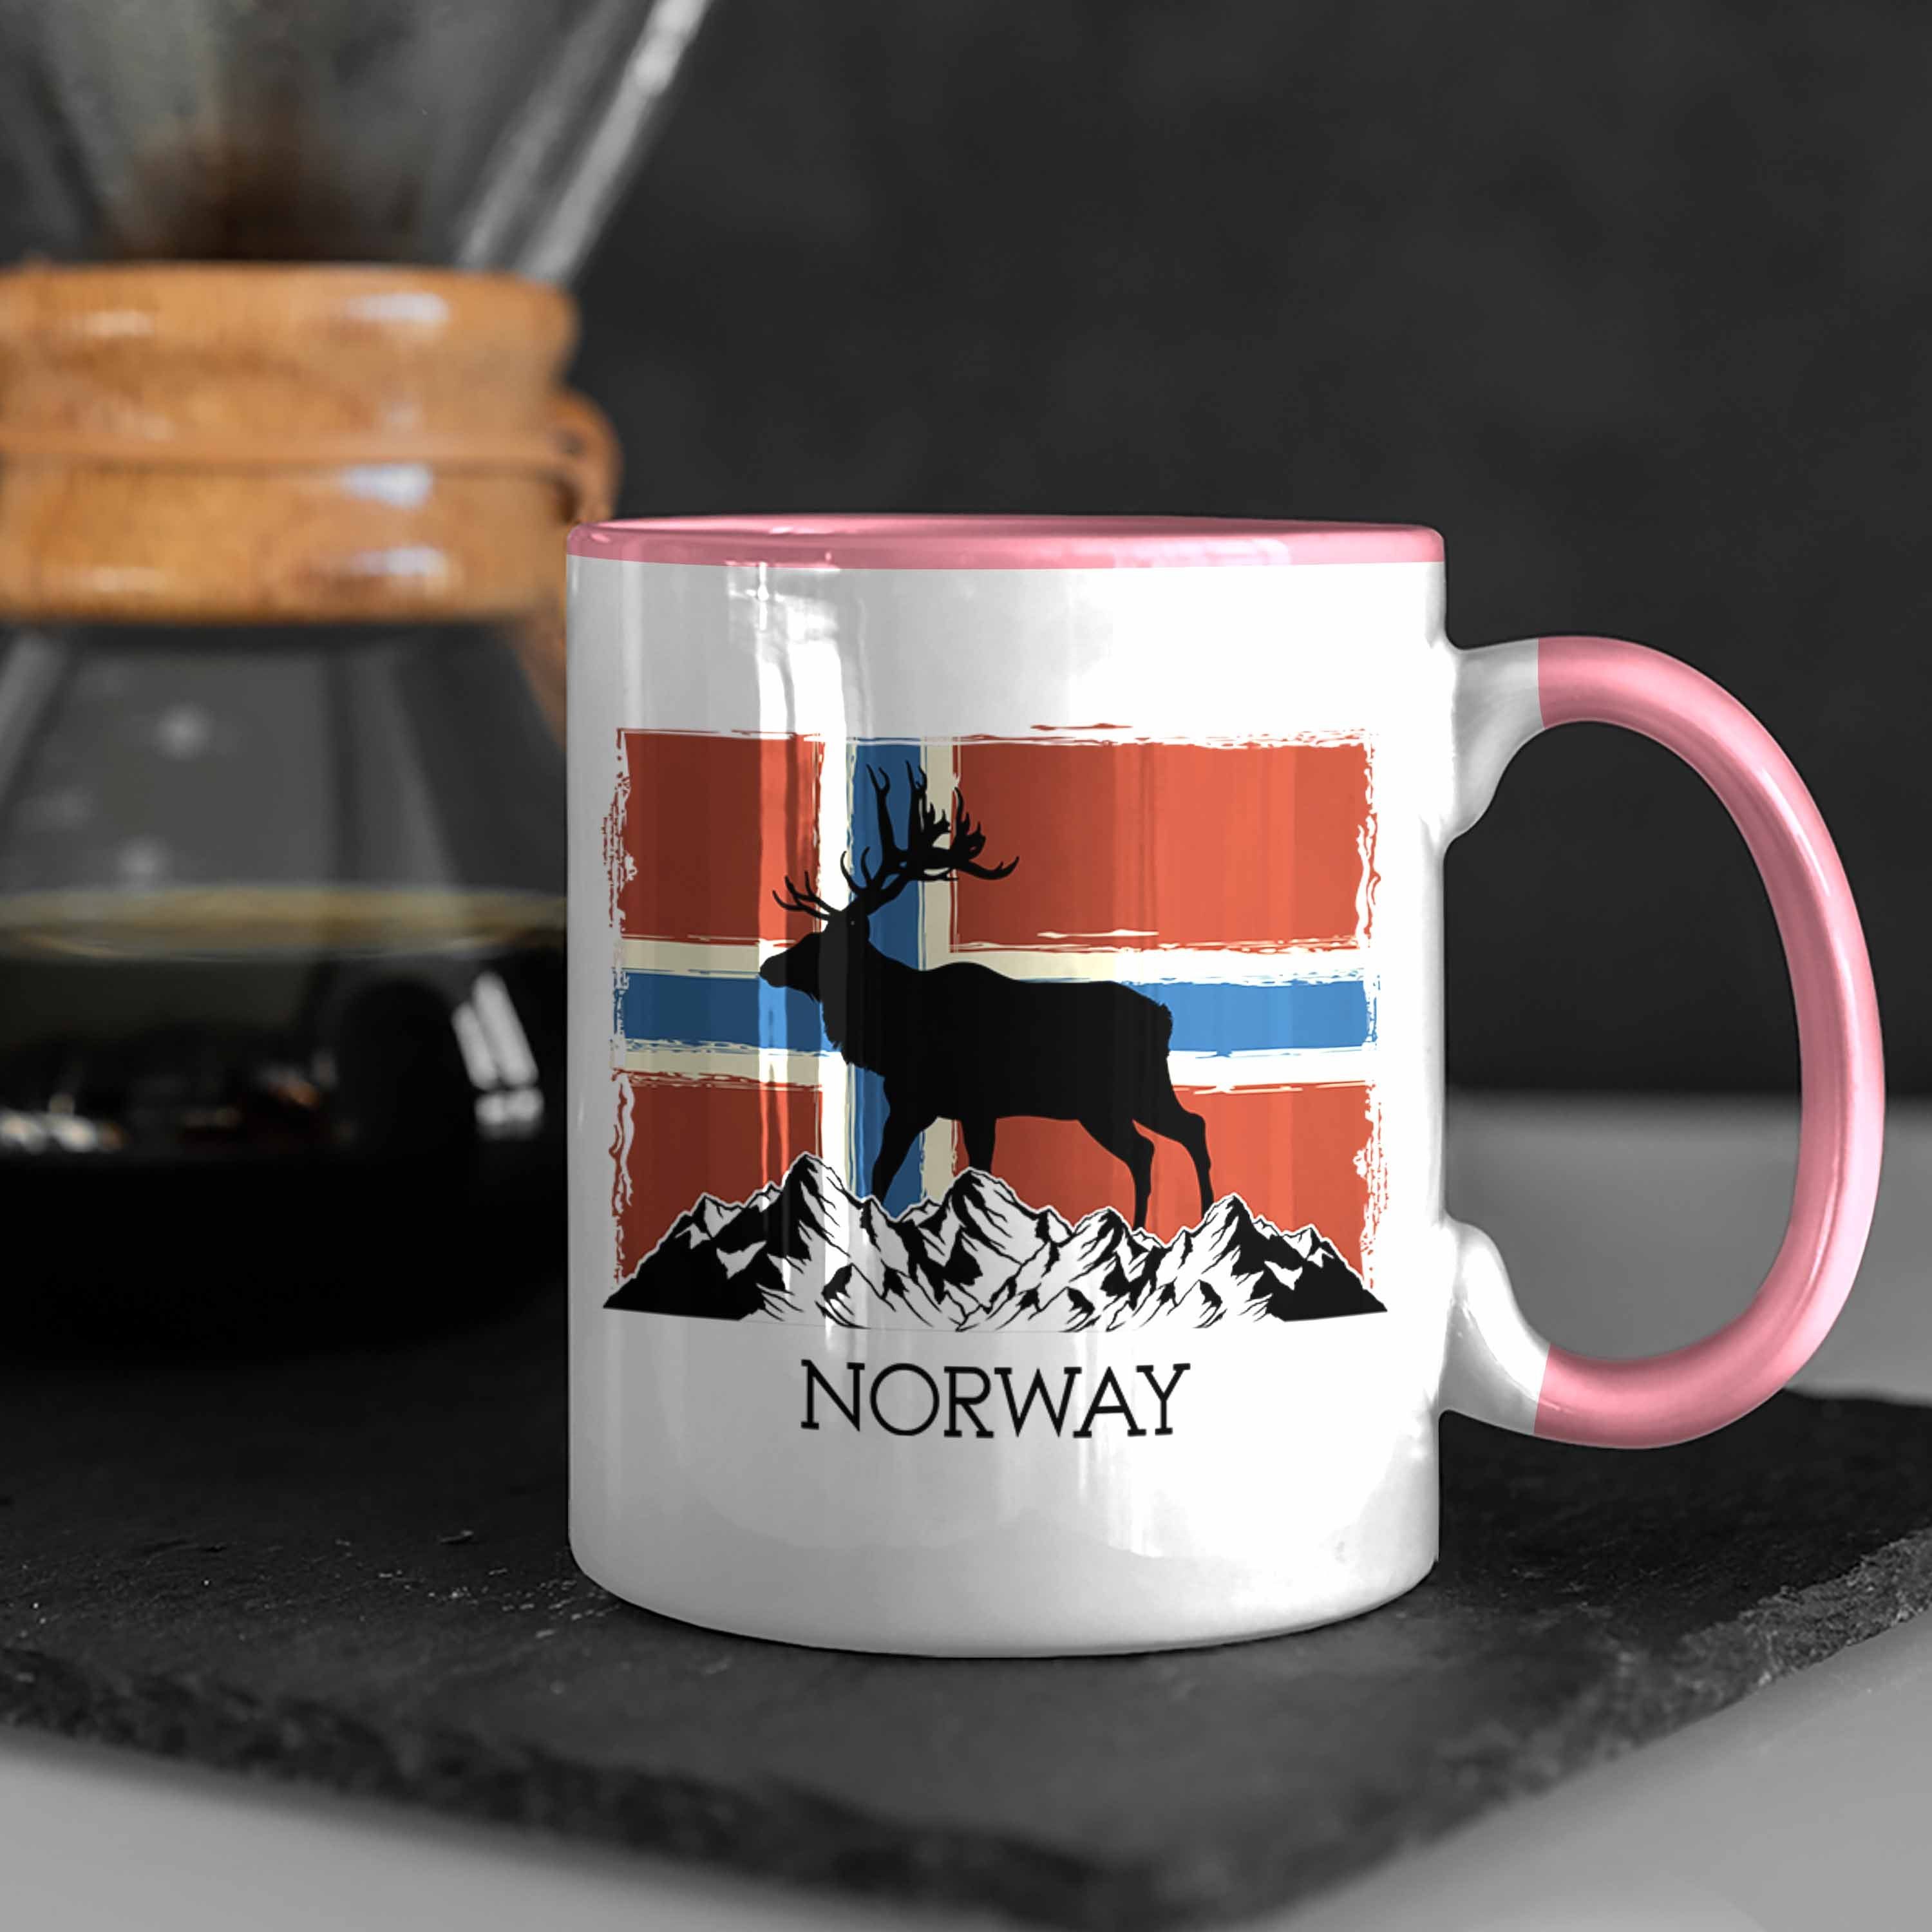 - Nordkap Elch Trendation Flagge Norwegen Trendation Geschenke Norway Rosa Tasse Tasse